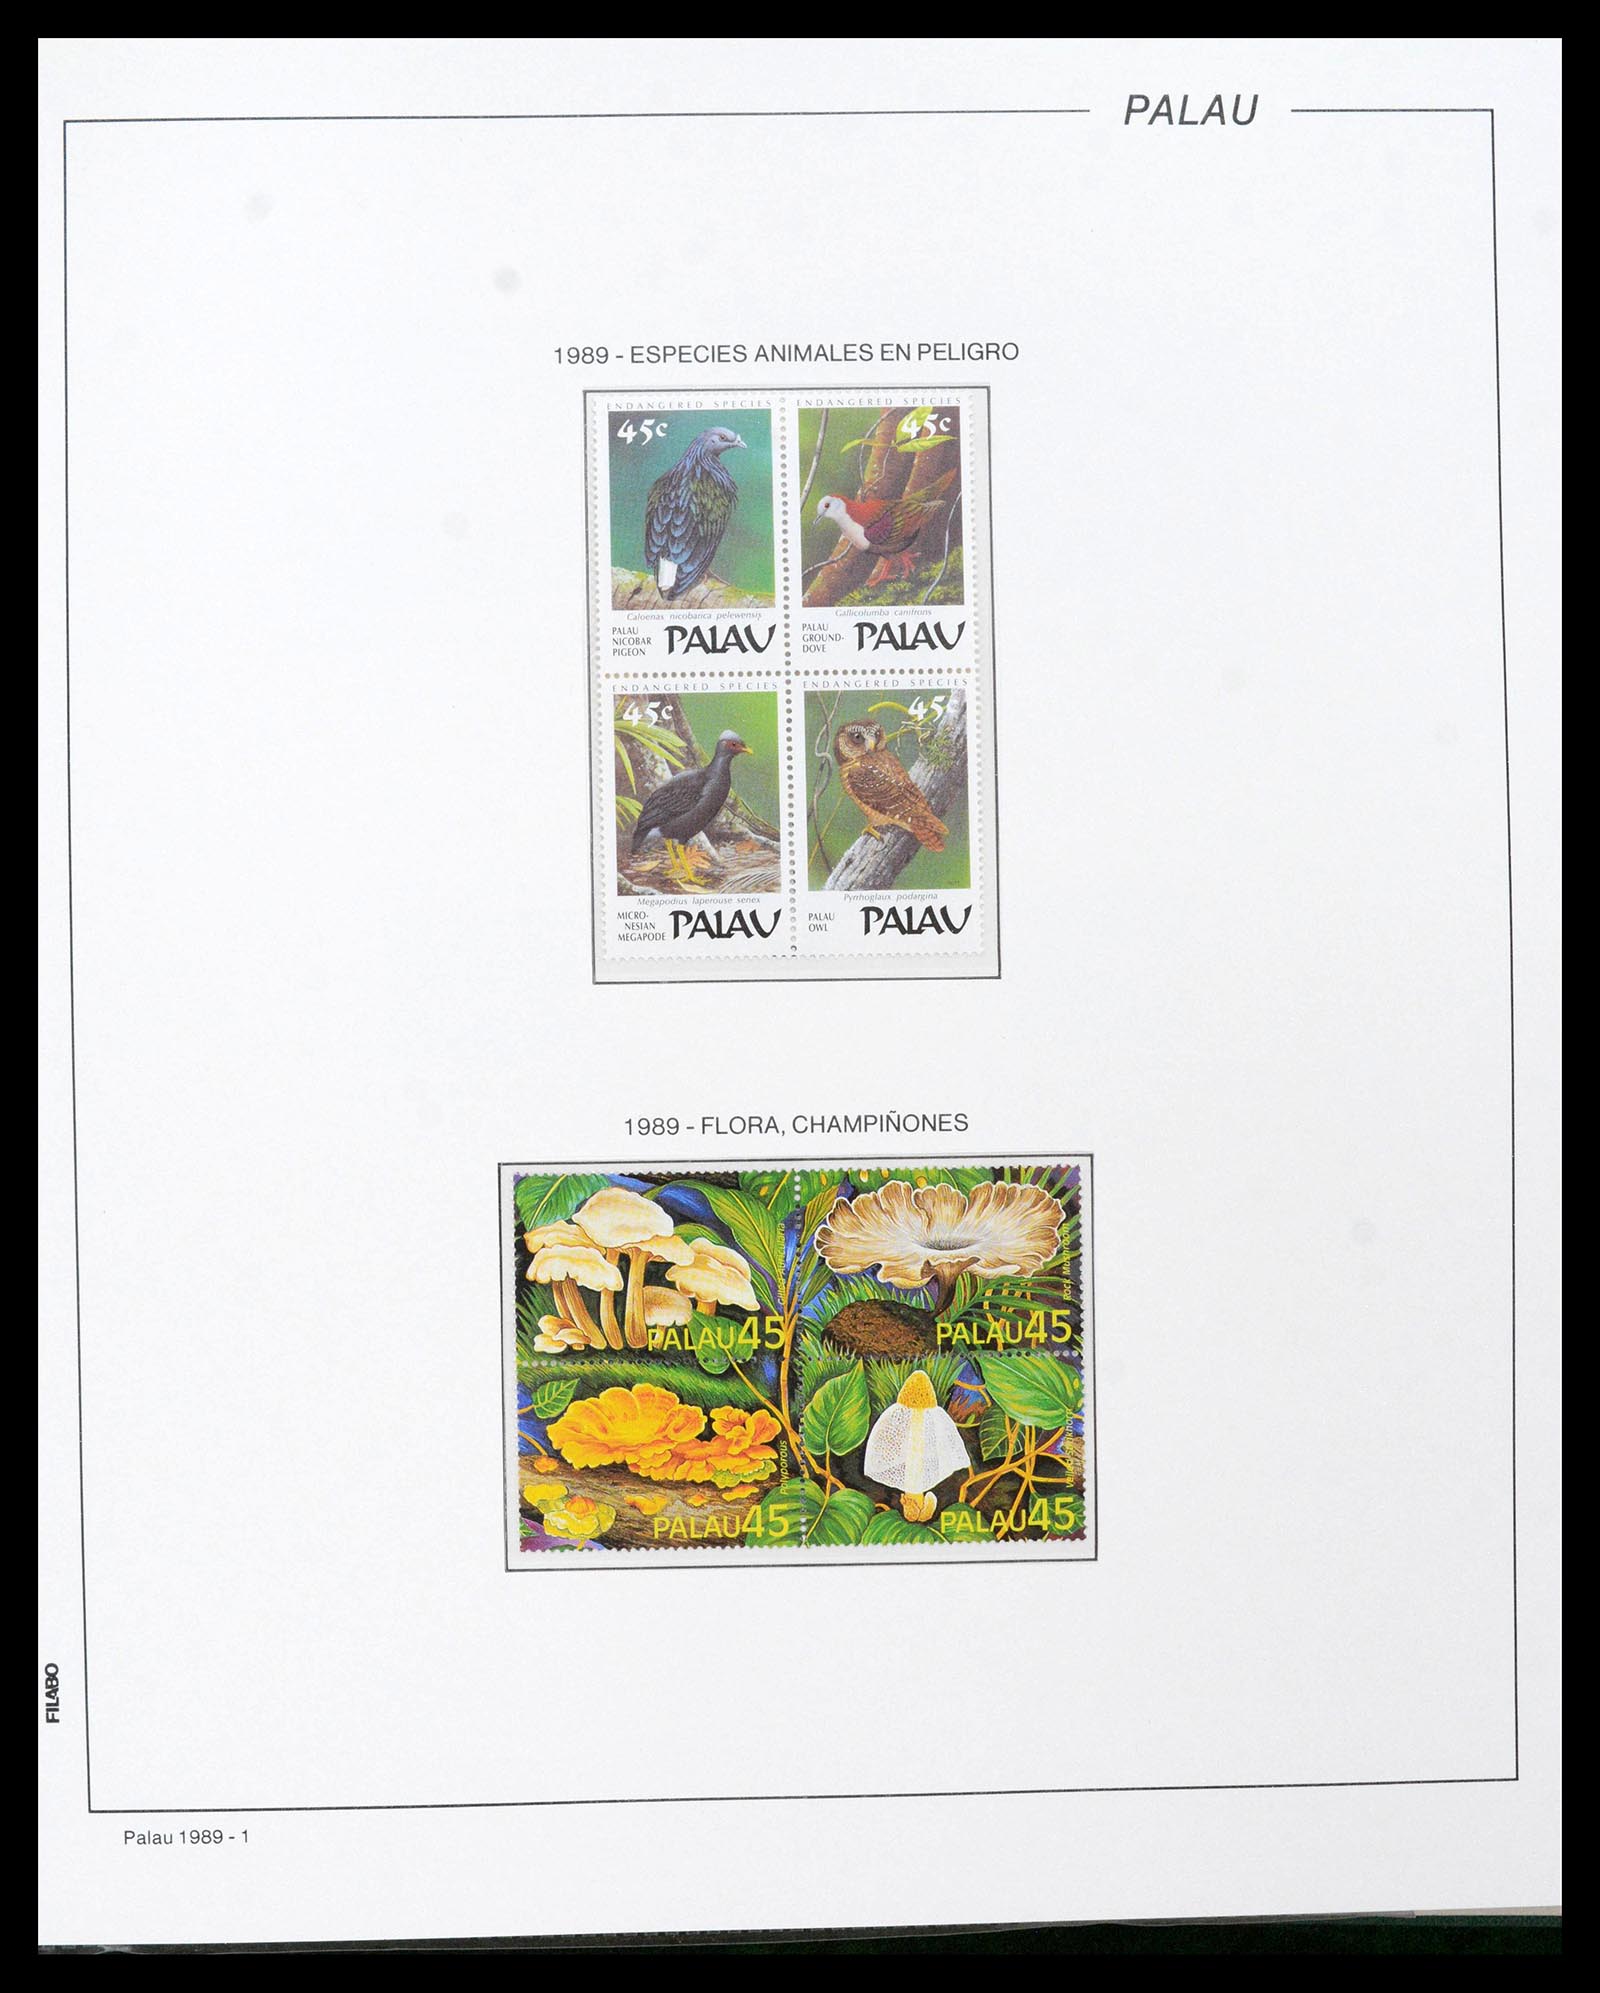 39222 0026 - Stamp collection 39222 Palau, Micronesia and Marshall islands 1980-1995.